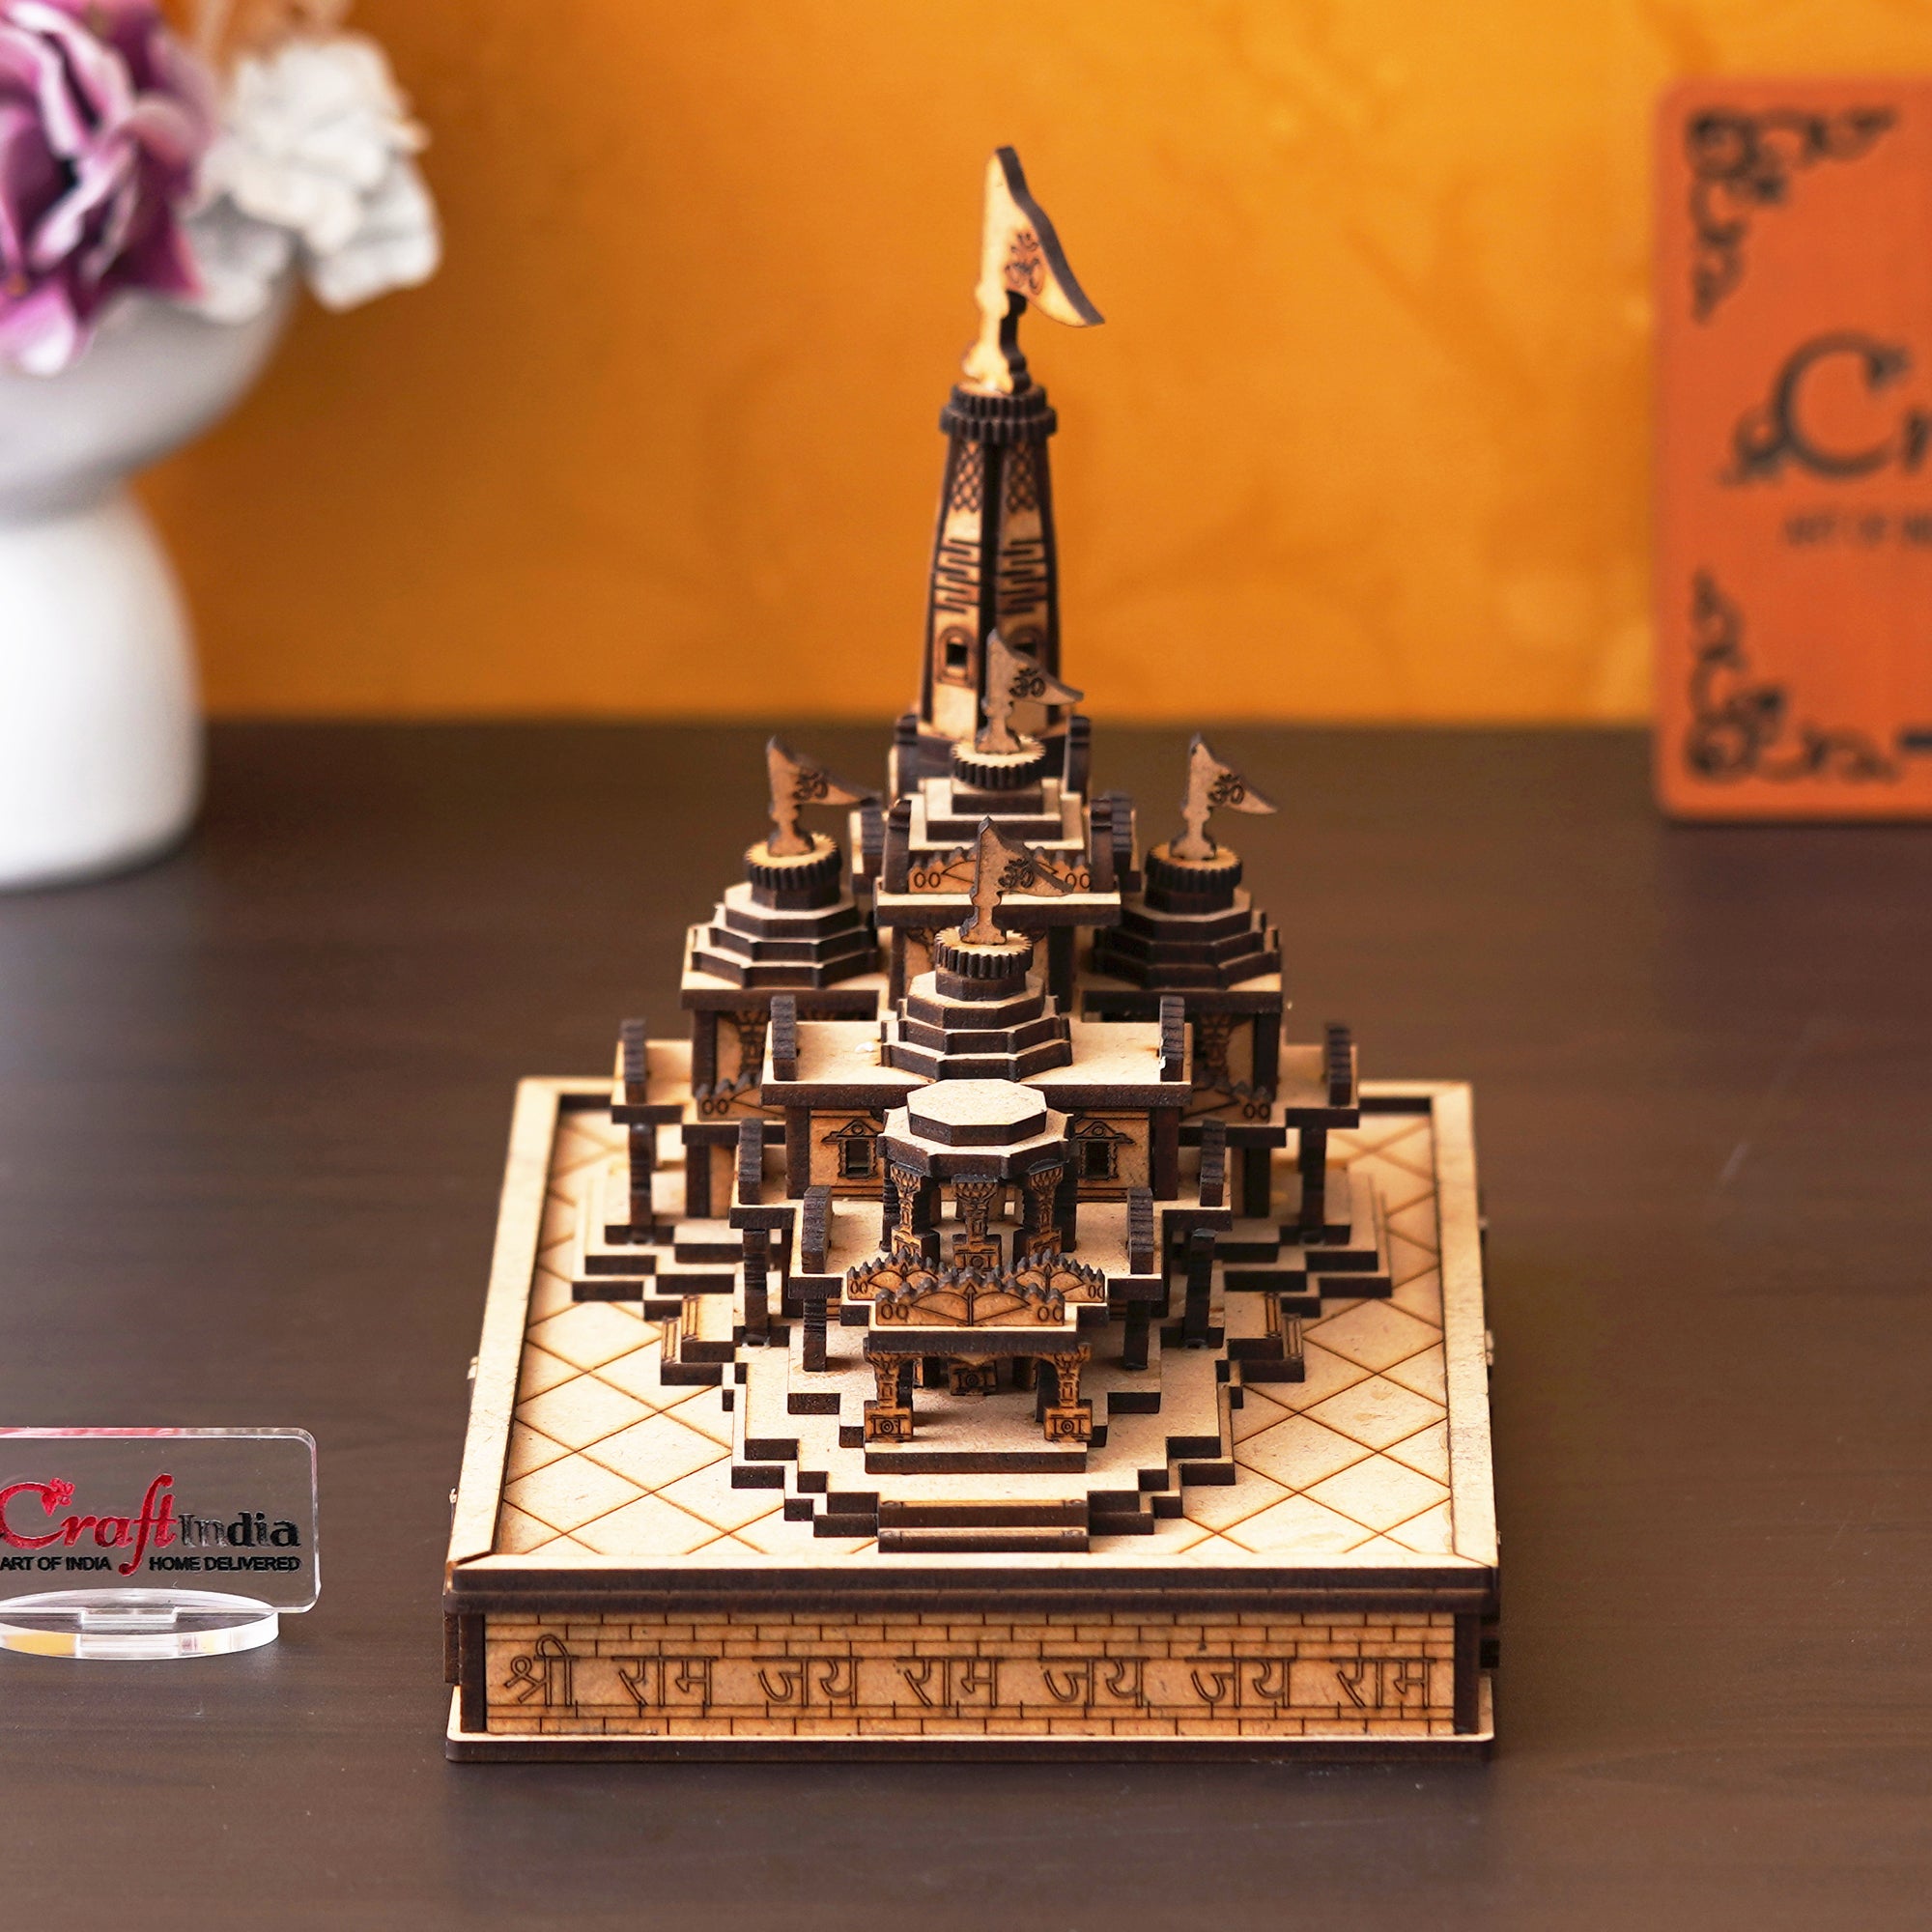 eCraftIndia Shri Ram Mandir Ayodhya Model - Wooden MDF Craftsmanship Authentic Designer Temple - Ideal for Home Temple, Decor, and Spiritual Gifting (Beige, Brown) 4